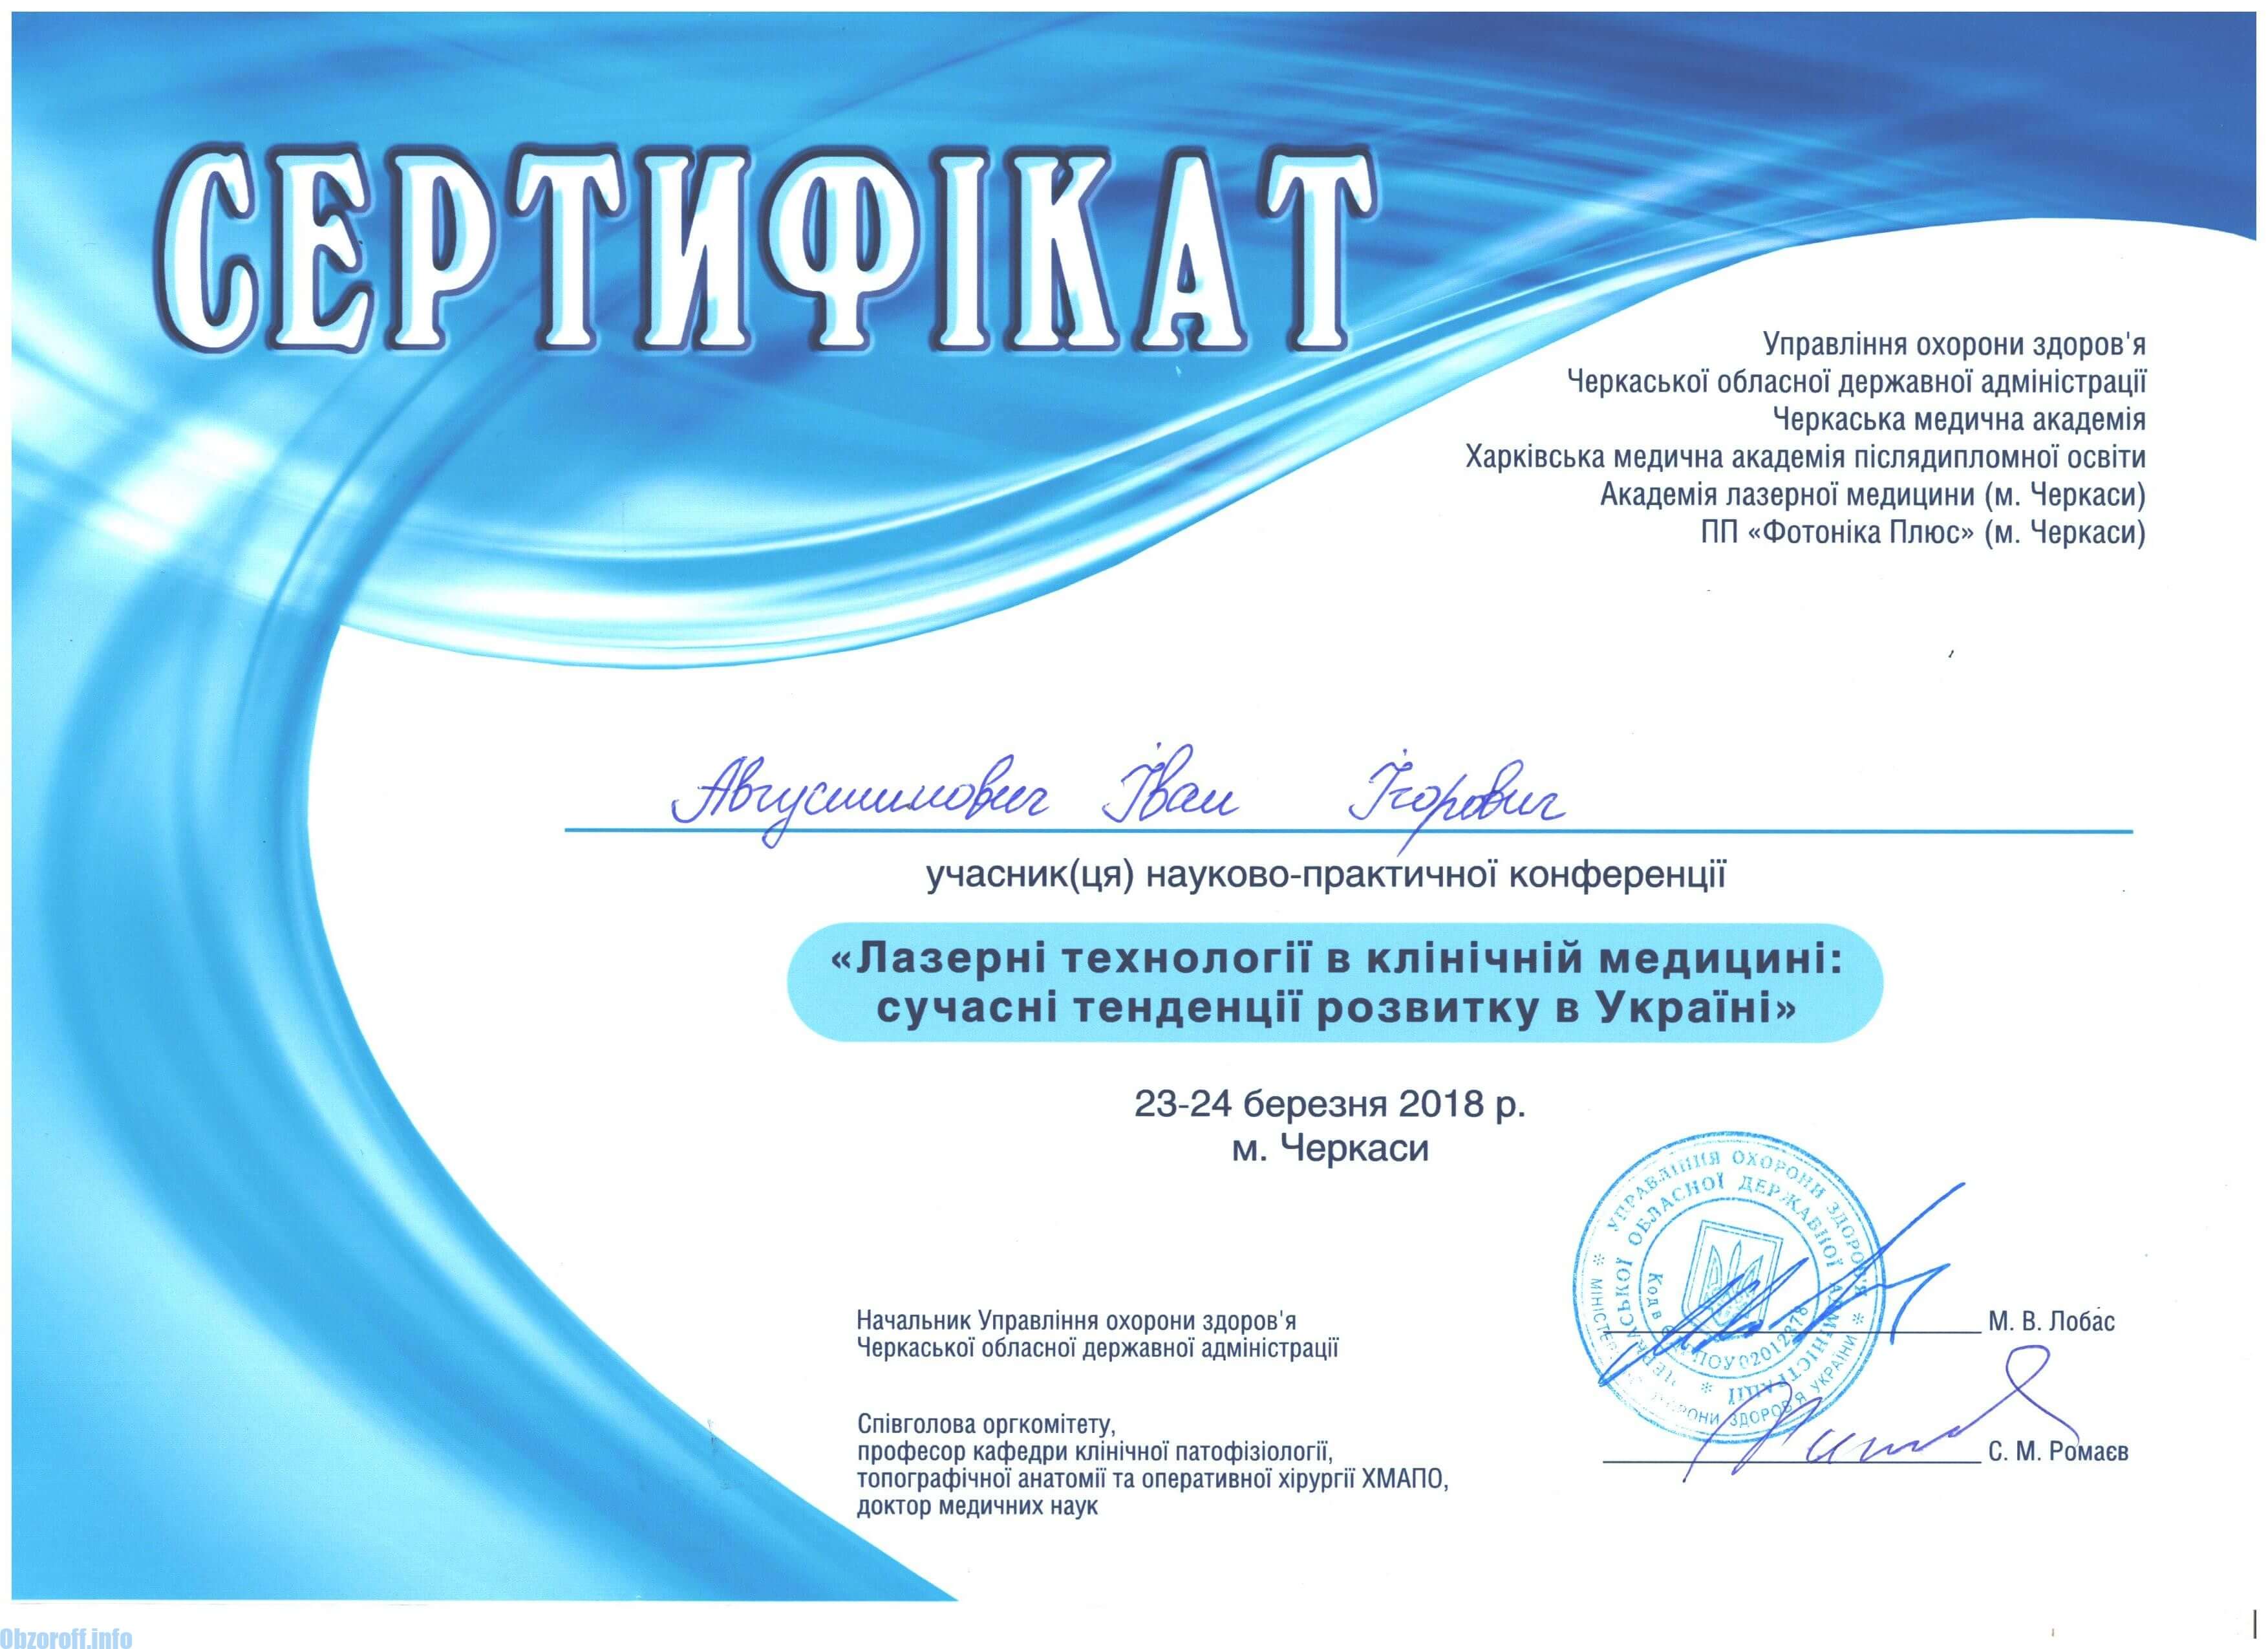 Certyfikat Laser Technology in Clinical Medicine